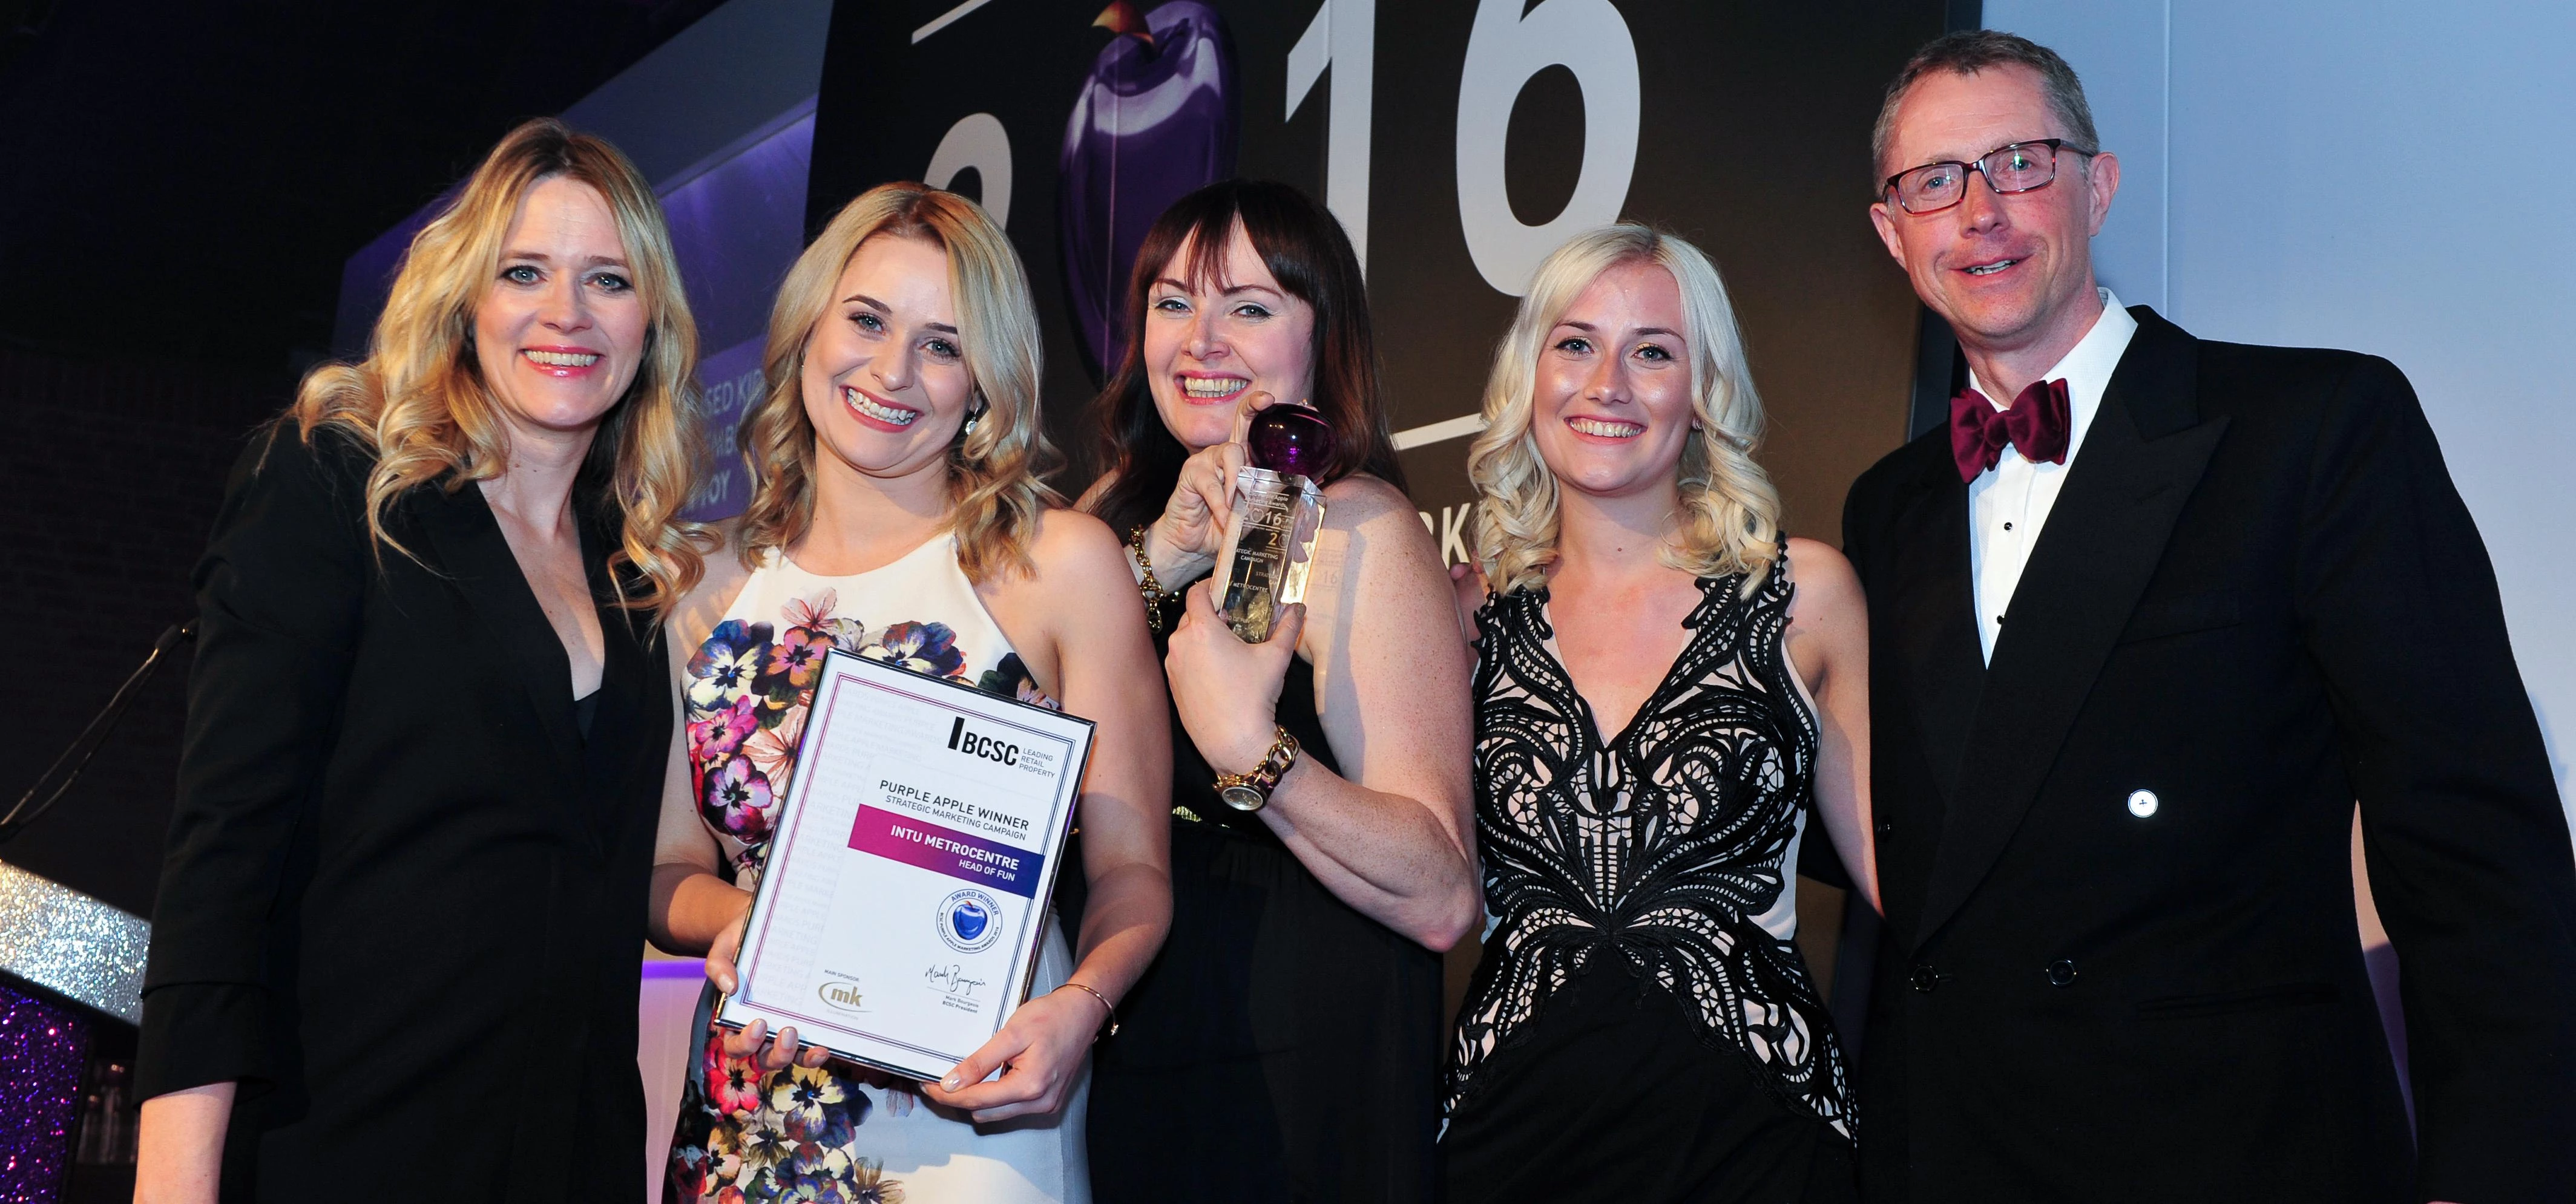 intu Metrocentre marketing team with their Purple Apple award